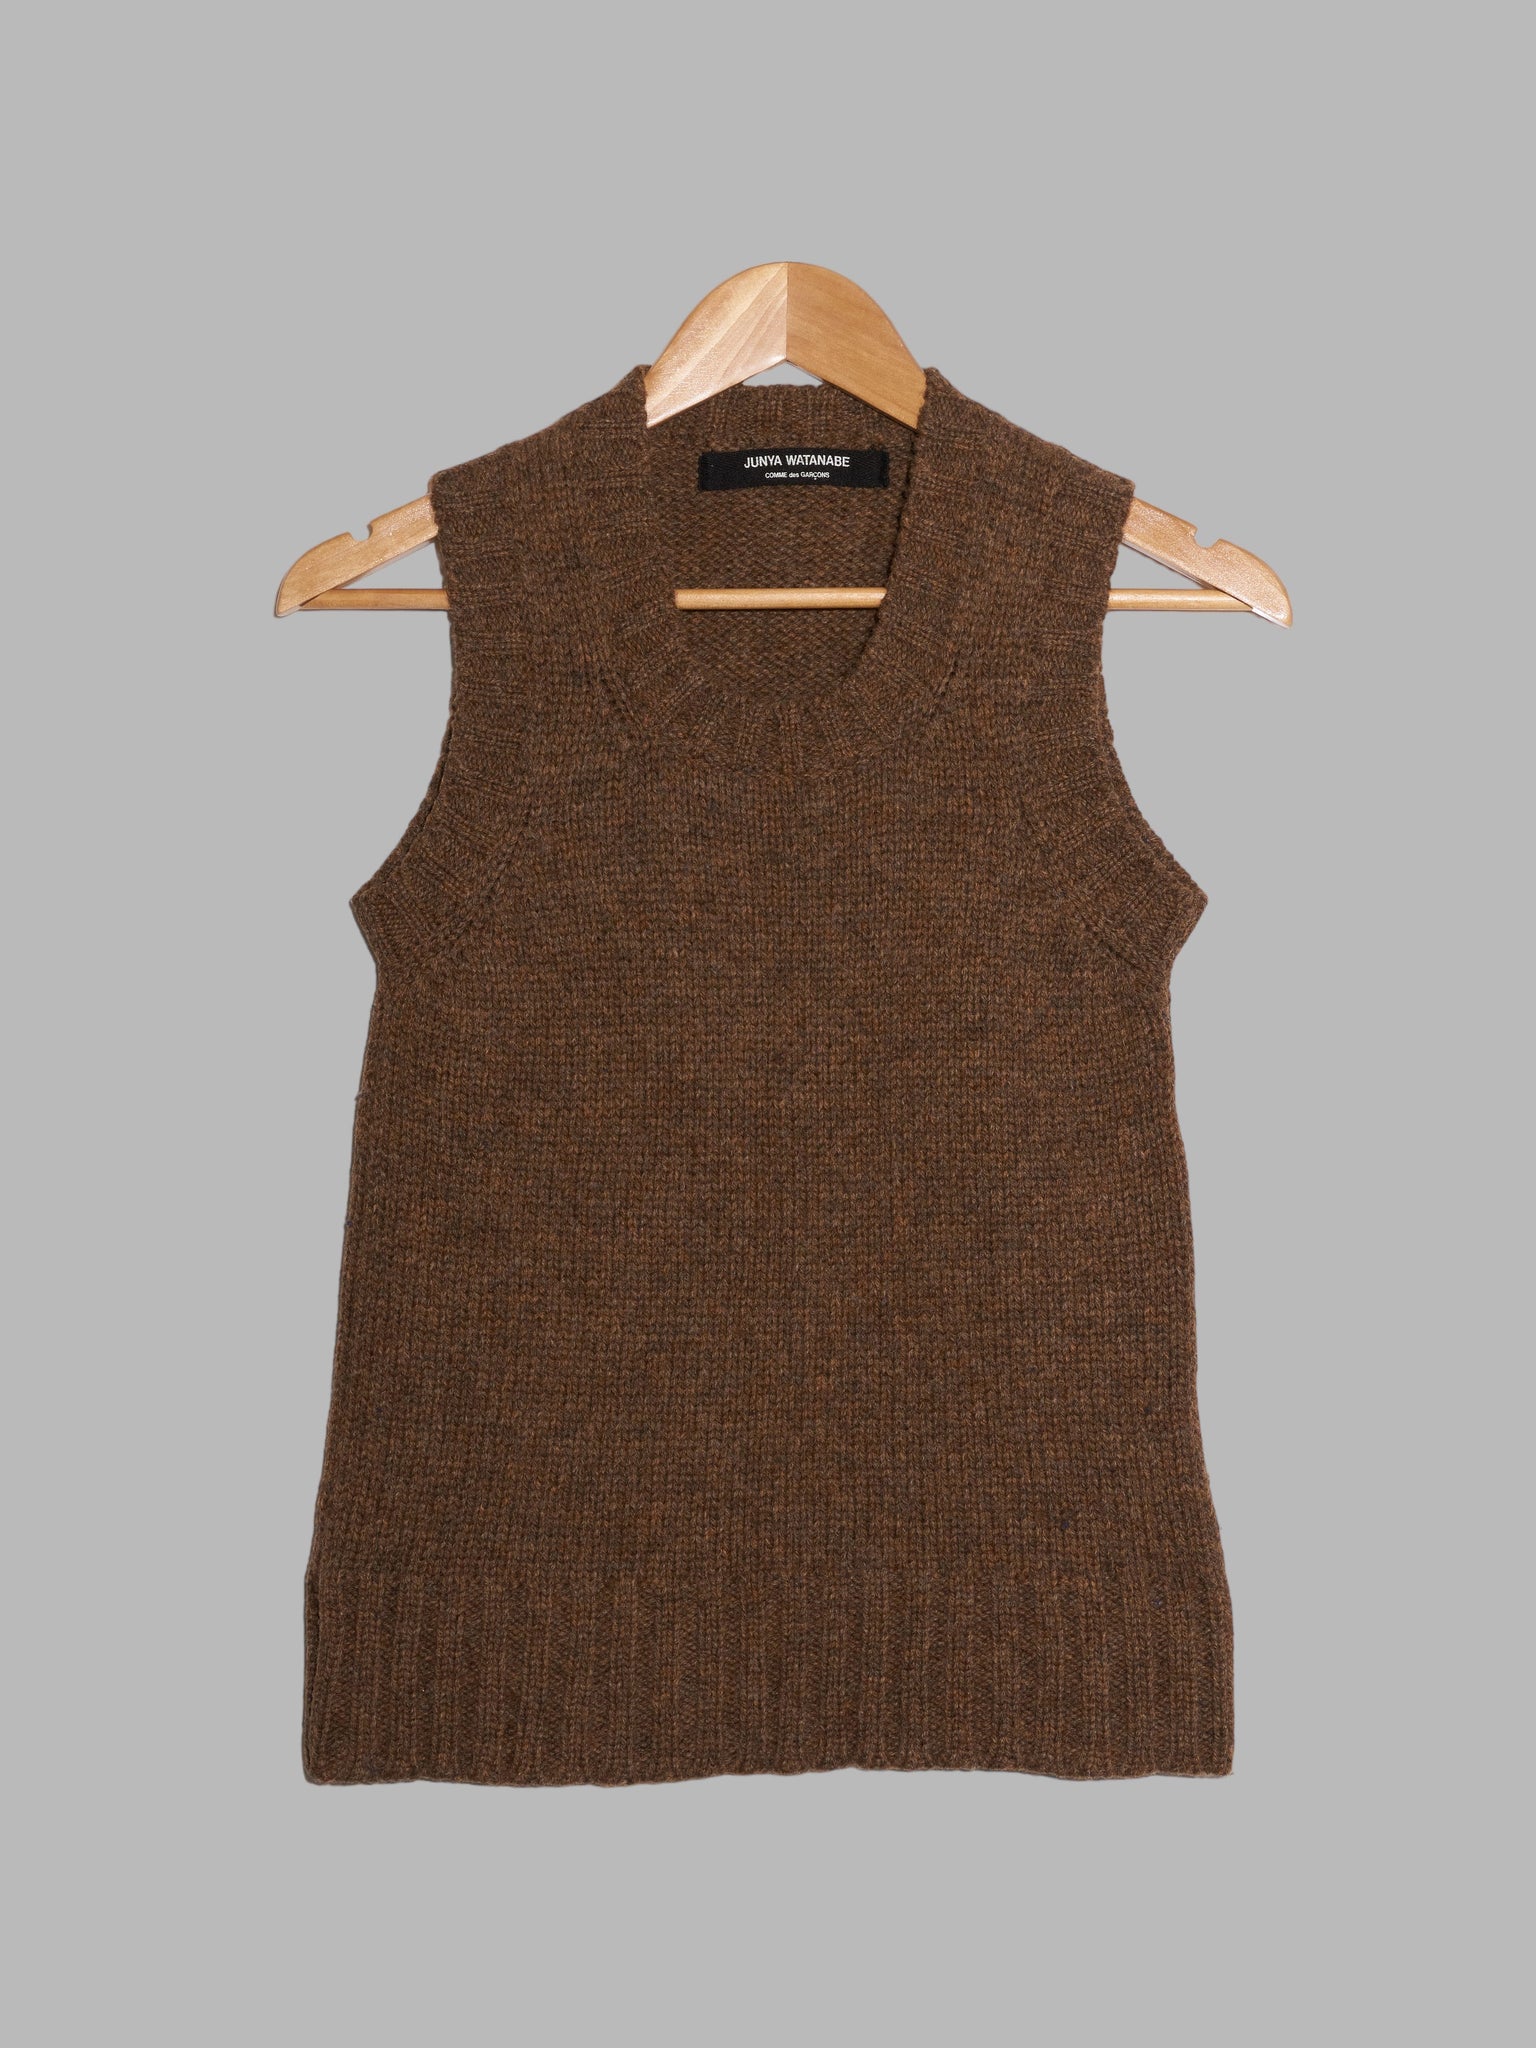 Junya Watanabe Comme des Garcons winter 1993 brown wool knitted vest